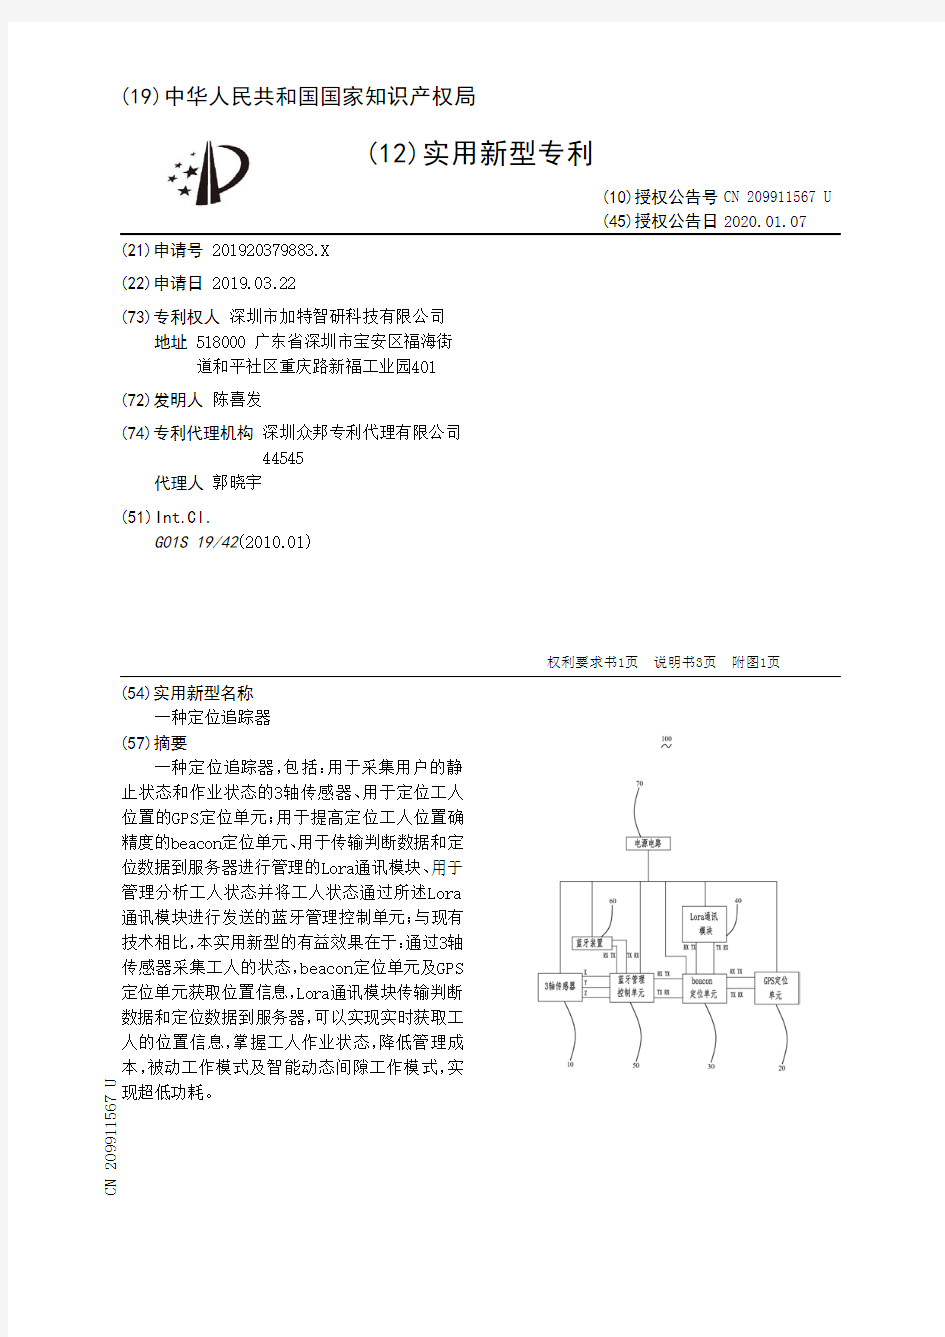 【CN209911567U】一种定位追踪器【专利】